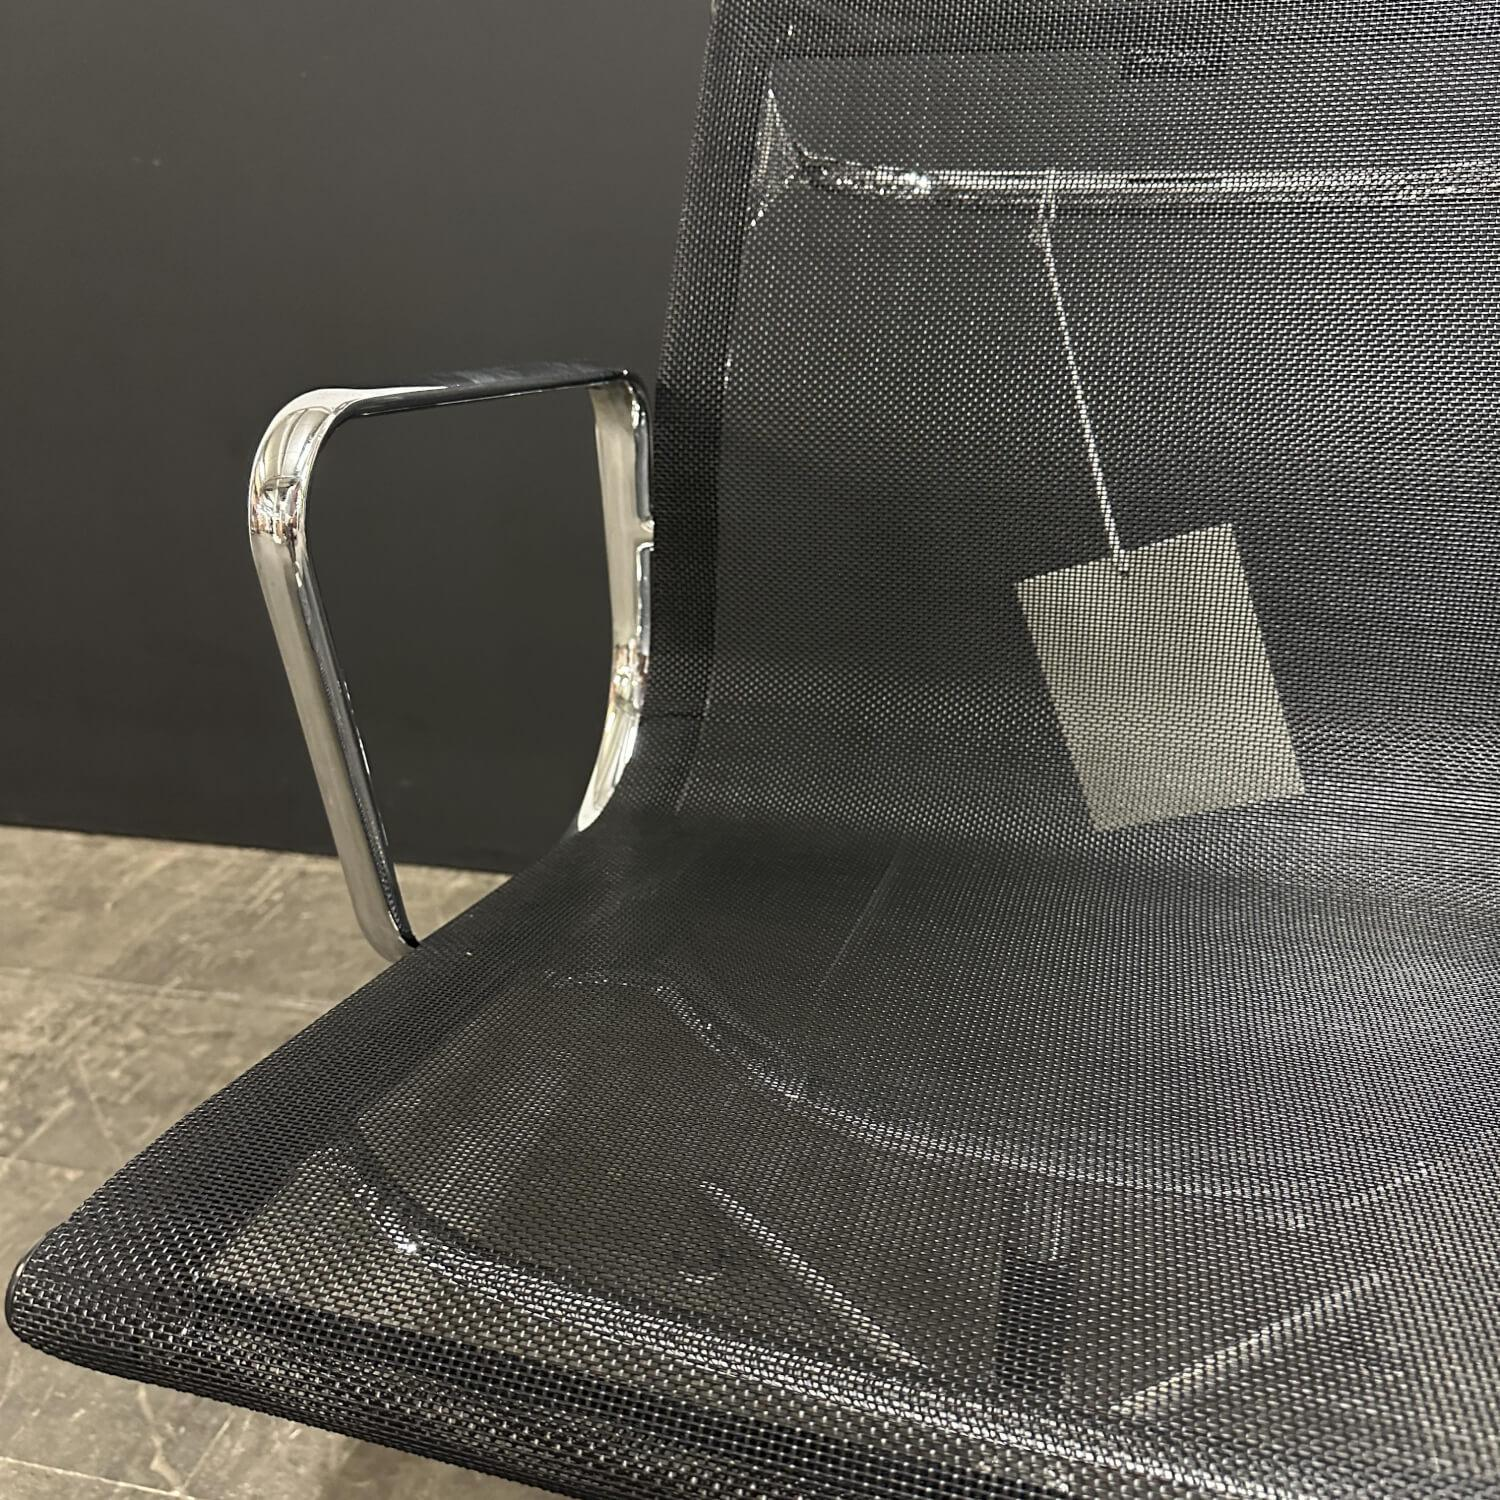 Stuhl Aluminium Chair EA108 Bezug Schwarz Gestell Aluminum Verchromt